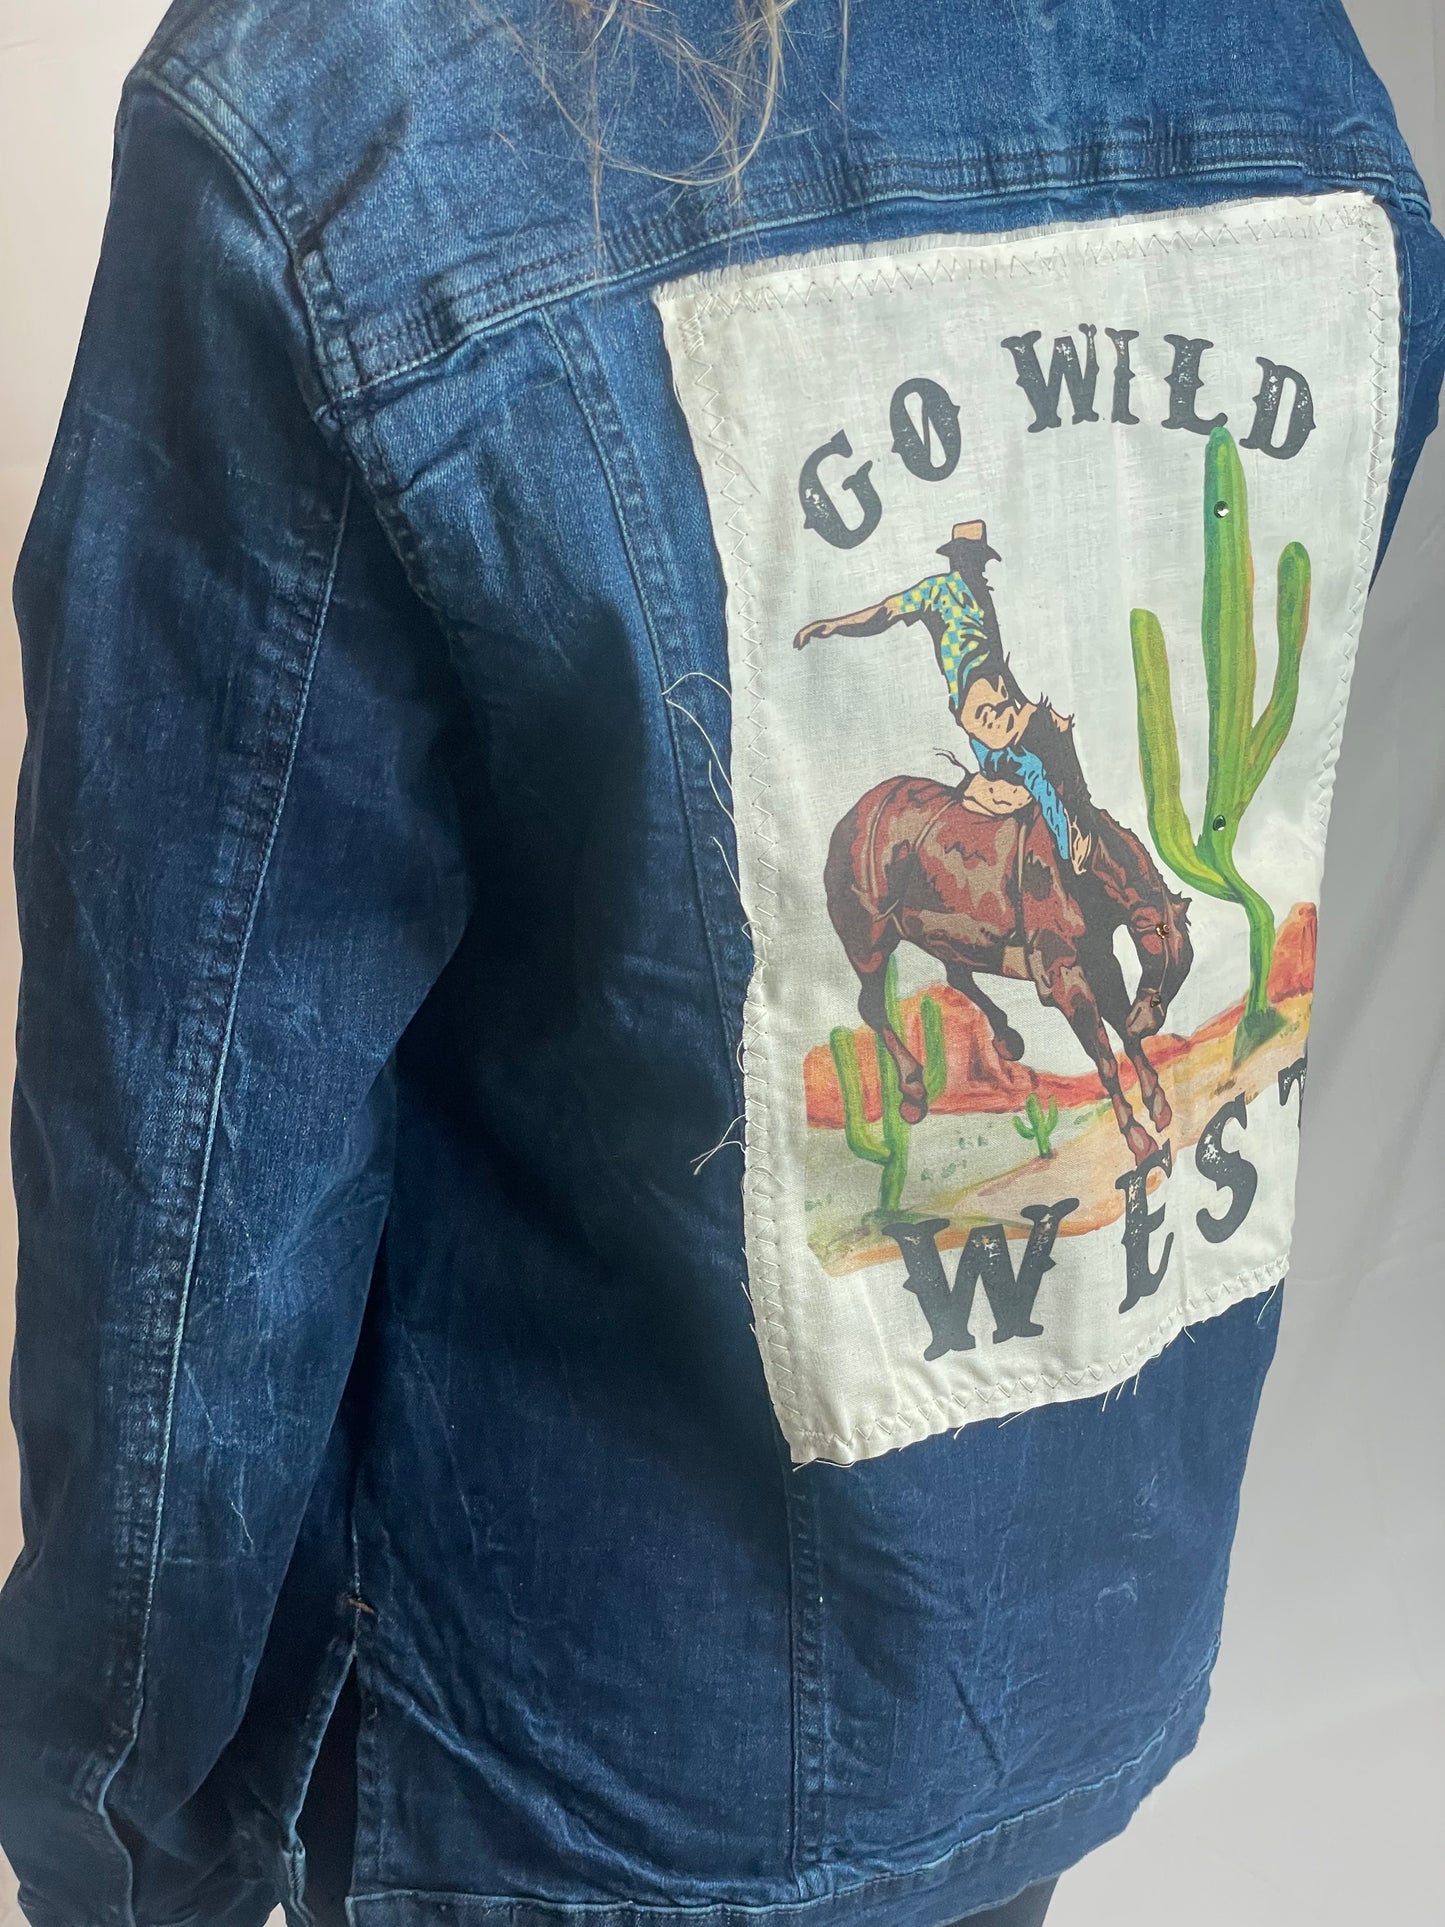 Go Wild West Denim jacket Distressed